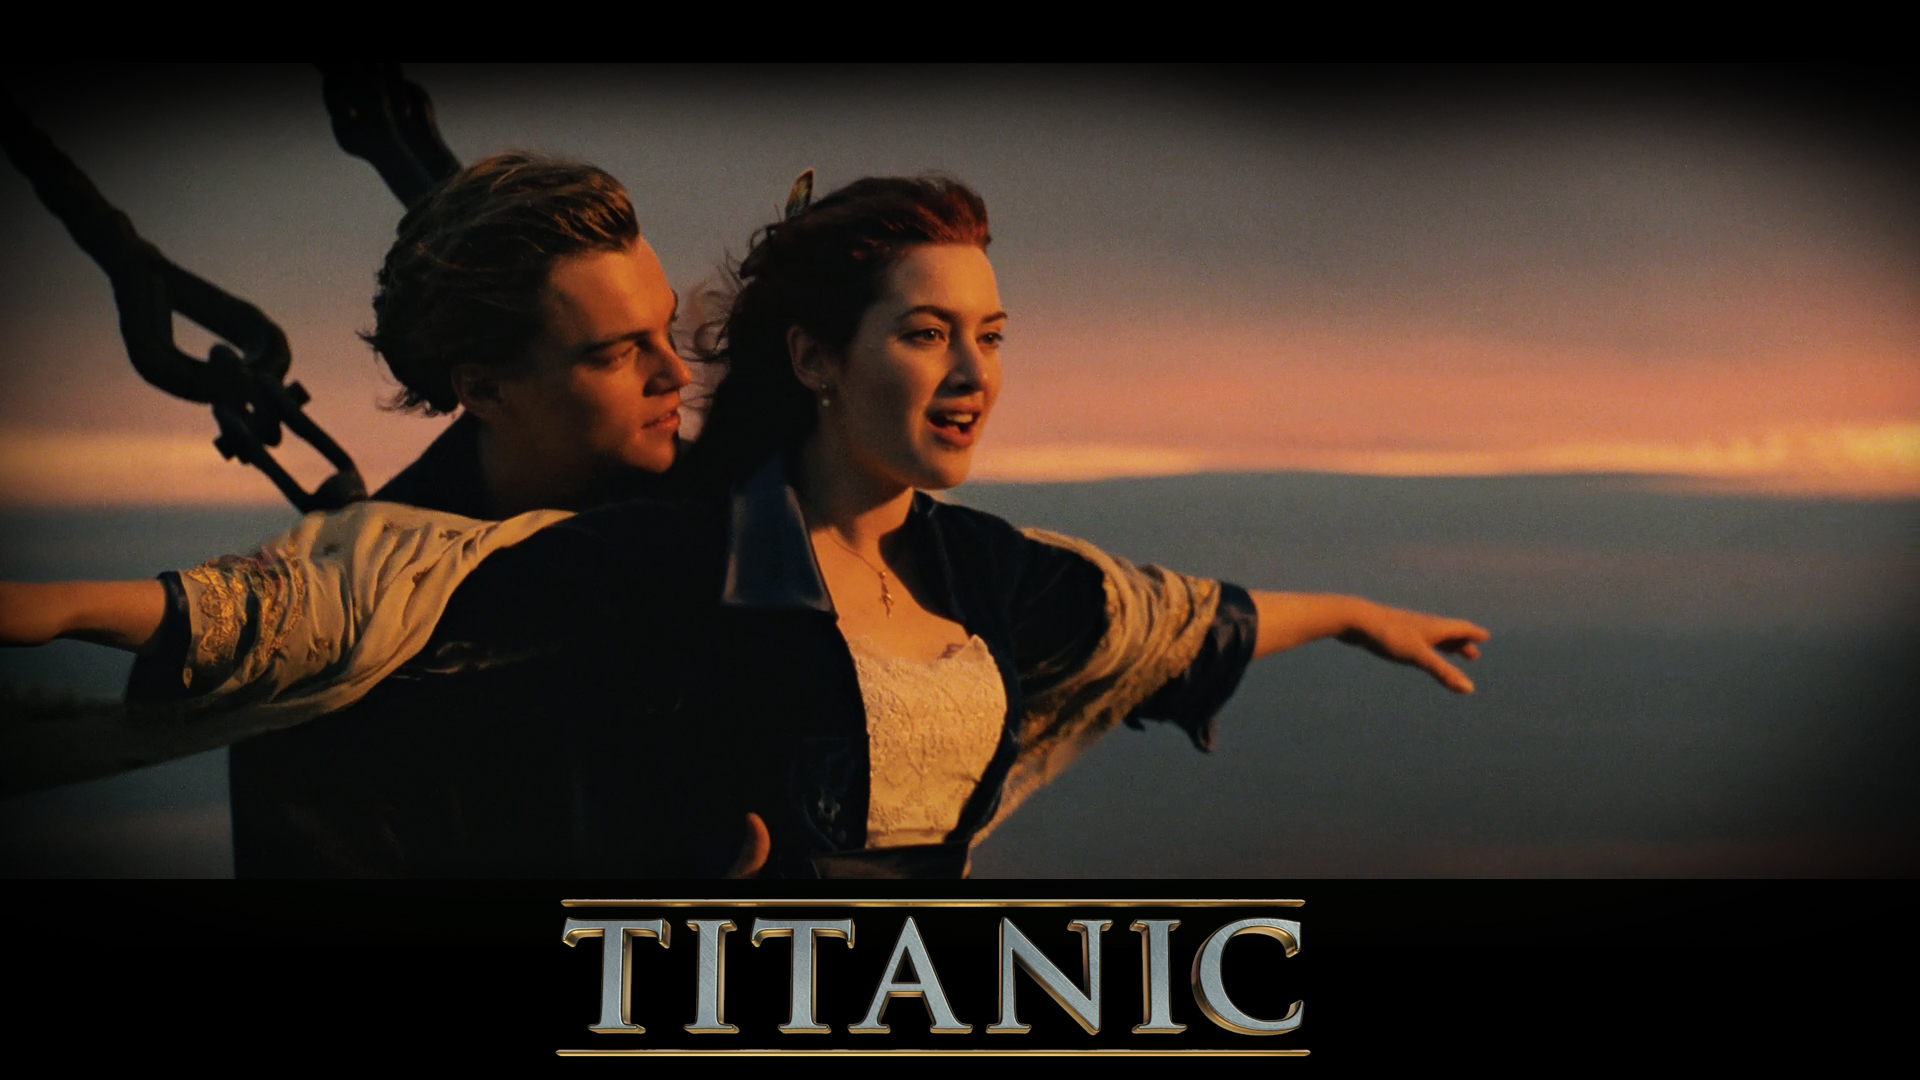 Titanic Disaster Drama Romance Ship Boat Mood Poster G Wallpaper